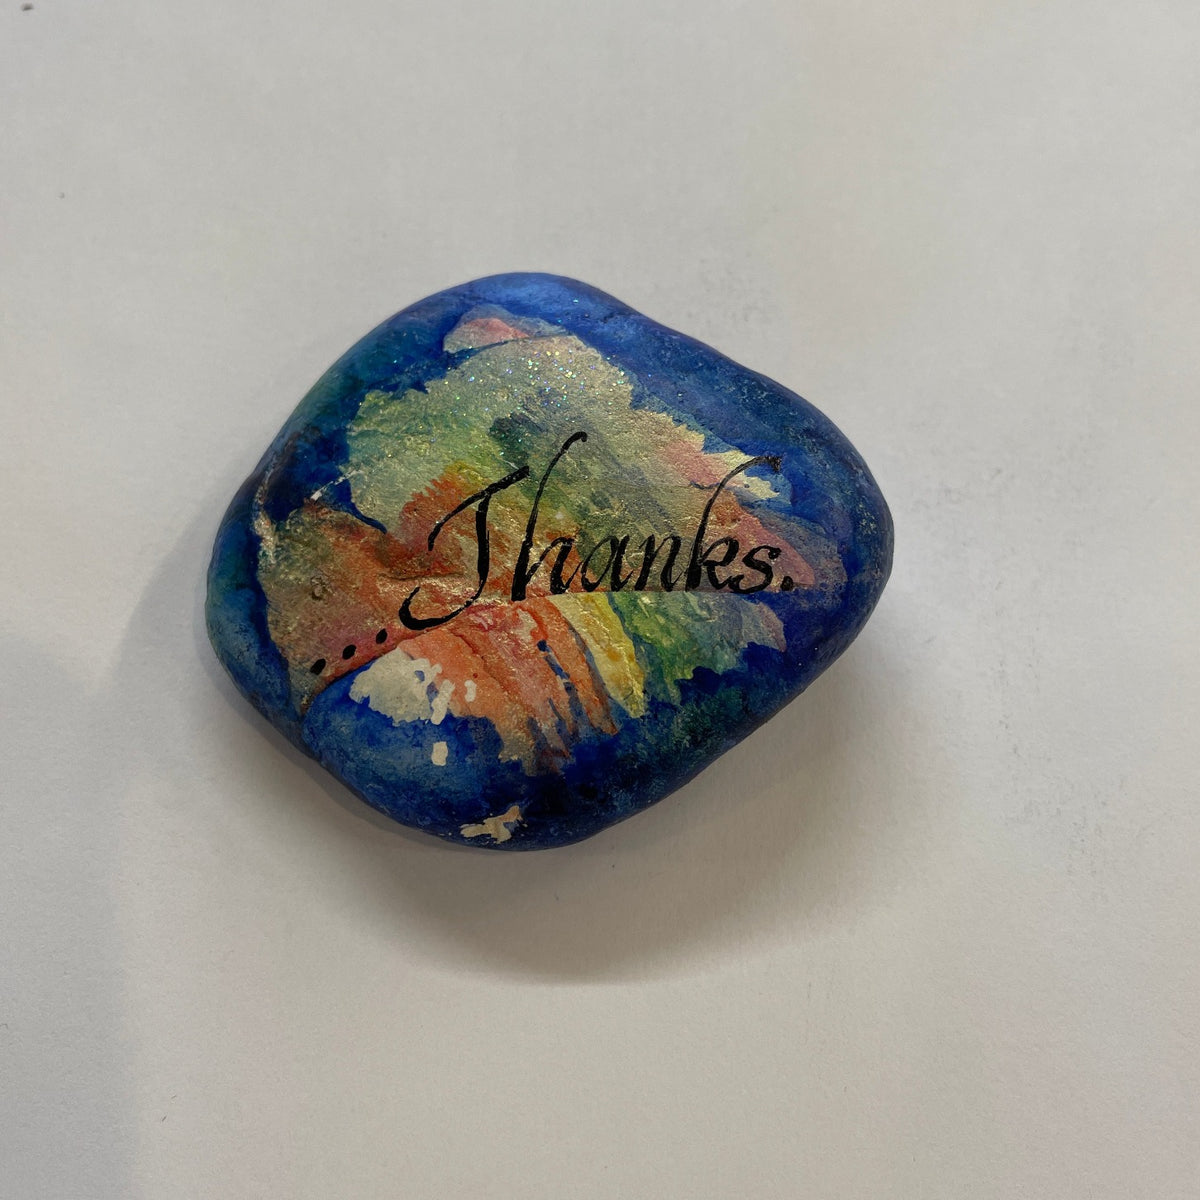 "Heart Felt Thanks" Hand Painted Stone by Alexis Penn Carver 